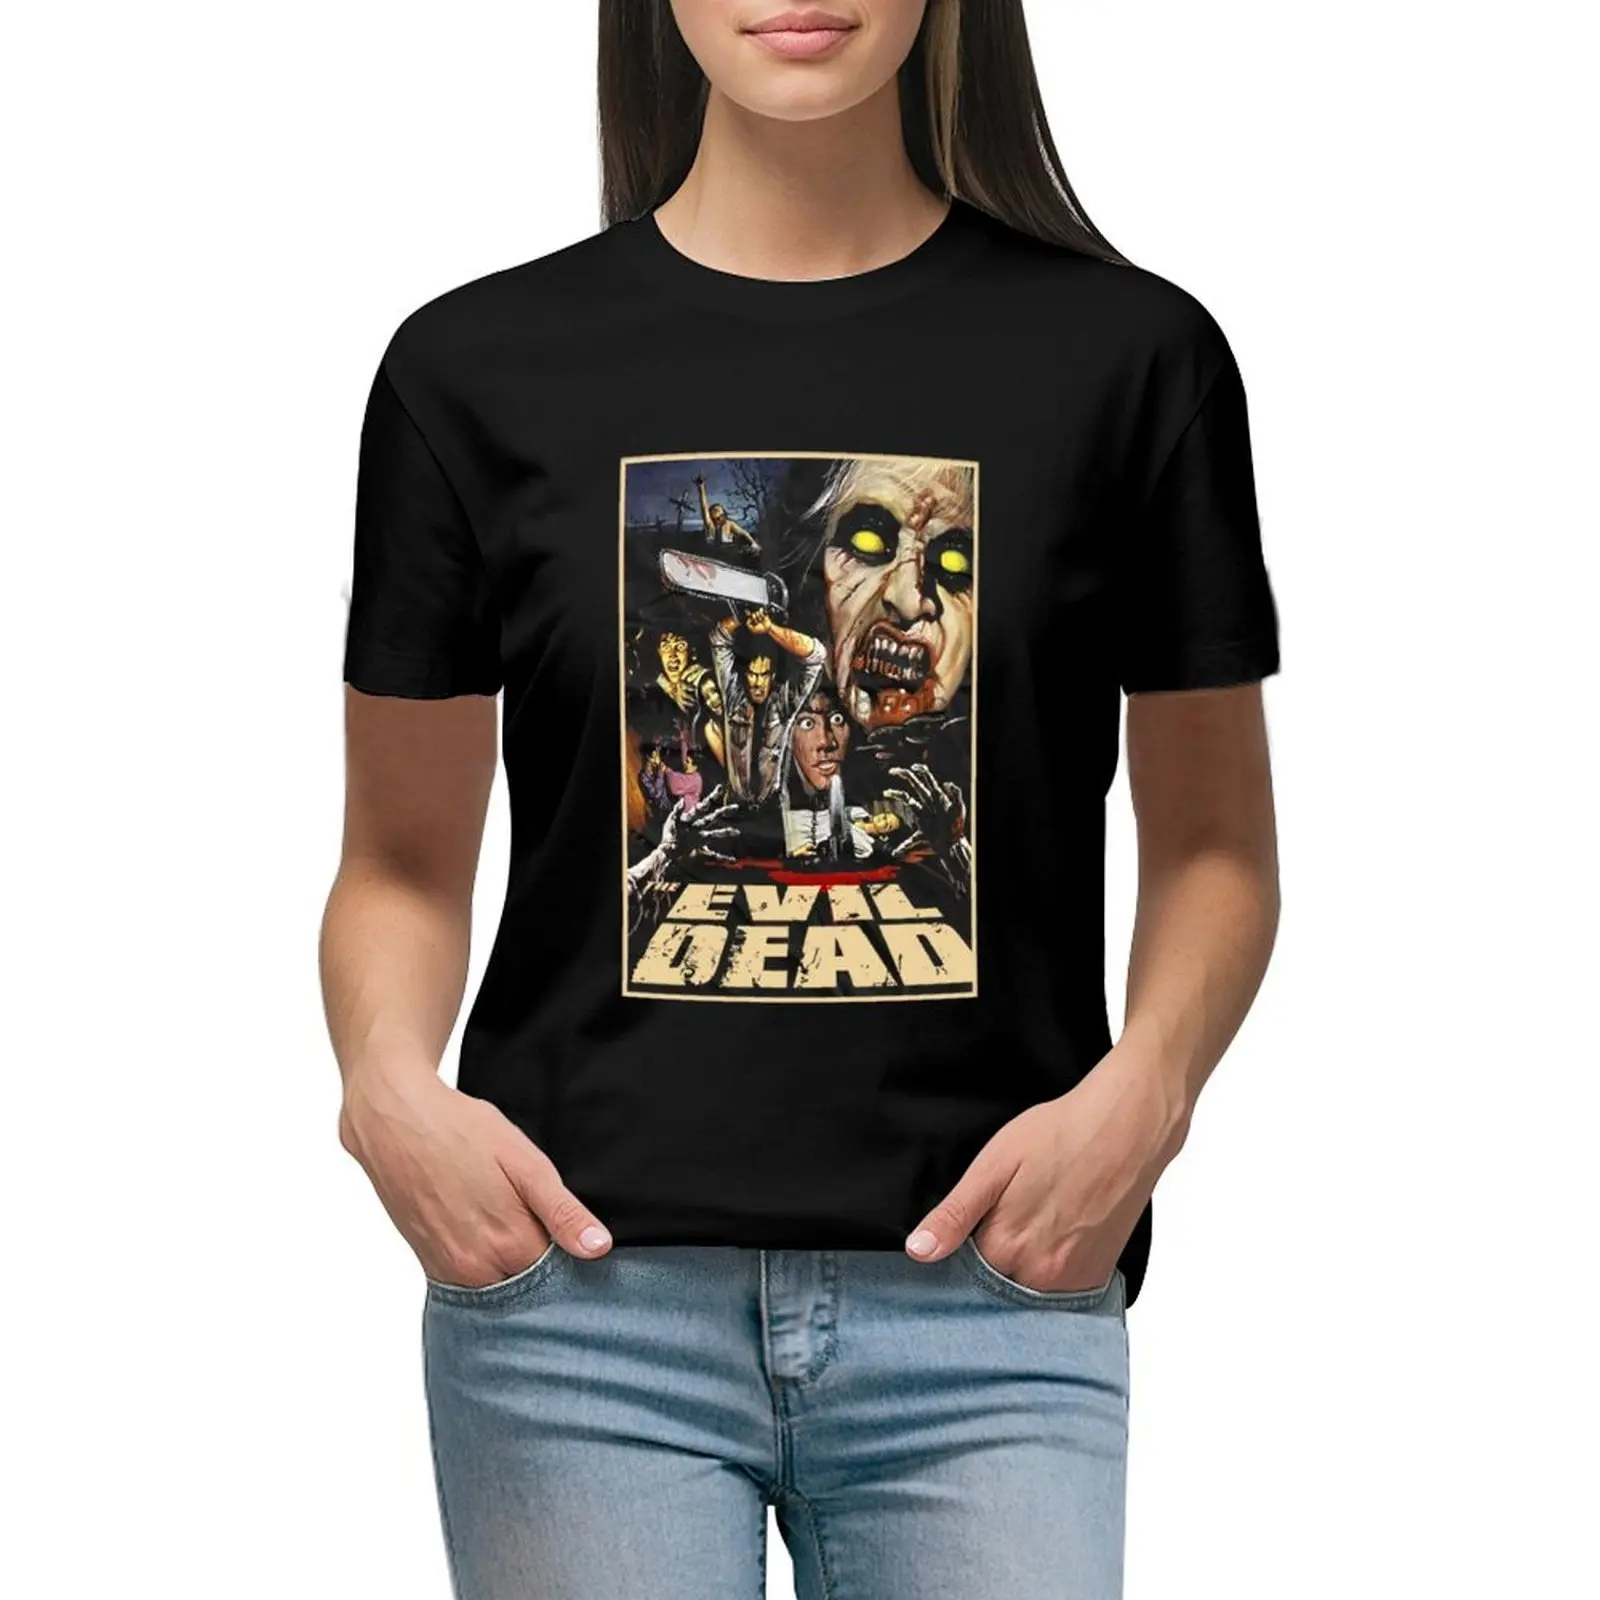 

Evil Dead V6 Horror Movie Black T Shirt T-shirt vintage clothes tops funny plus size t shirts for Women loose fit